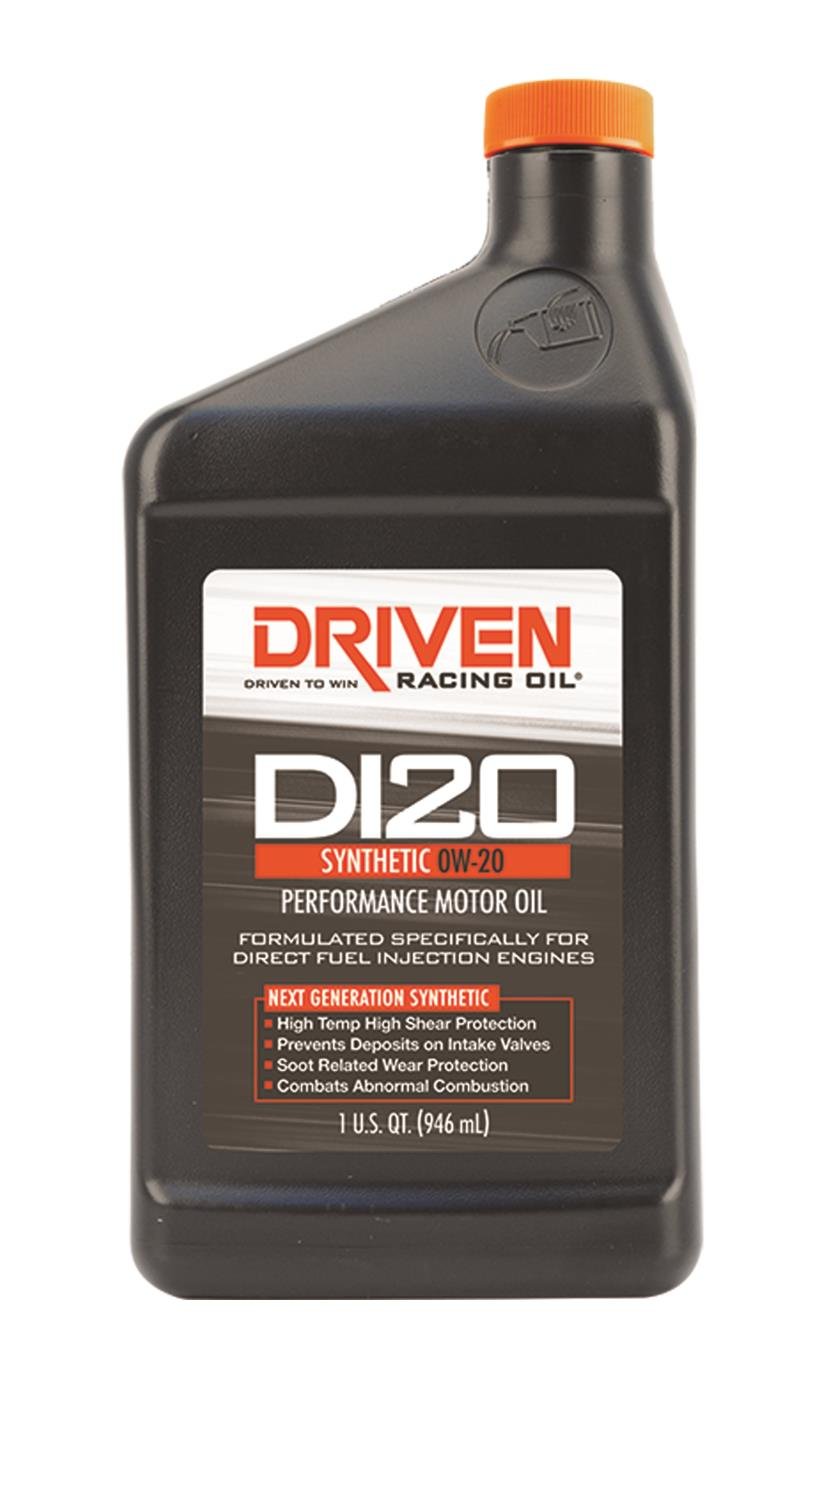 DI20 0W-20 Synthetic Performance Oil 1 Quart